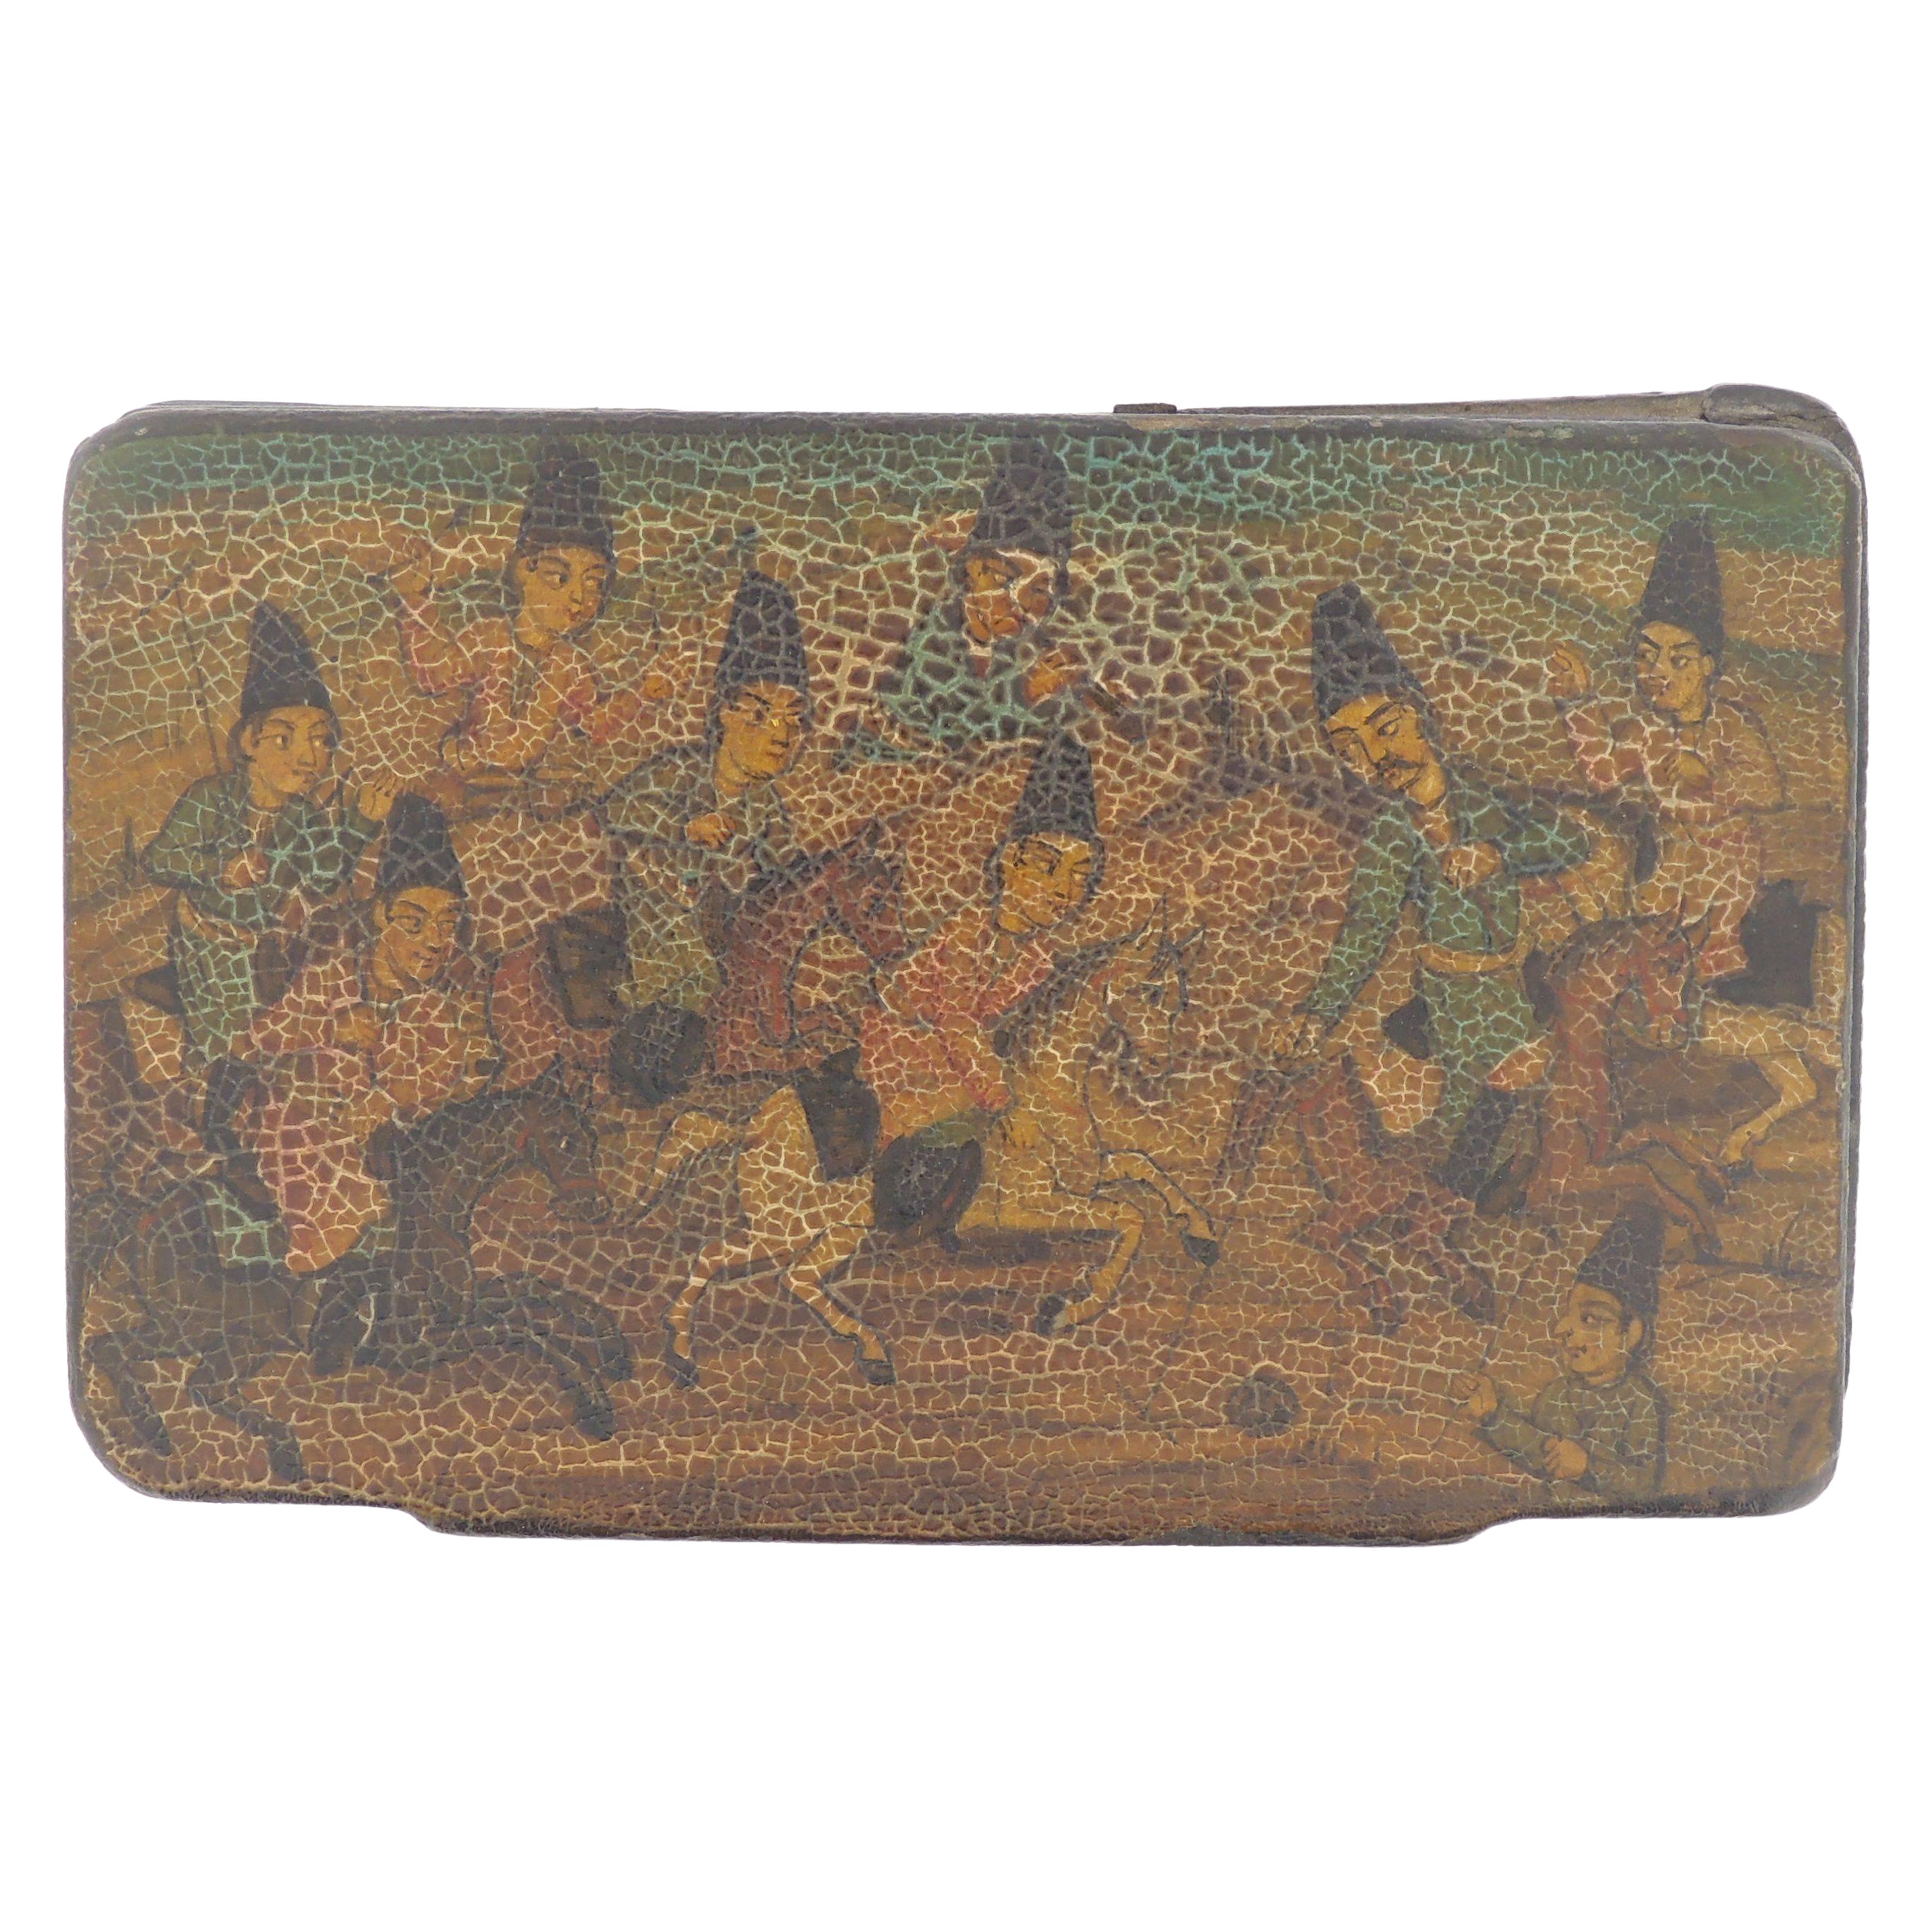 Antique Qajar Period Persian Papier Machê Snuff Box Depicting Chovgan or Polo For Sale